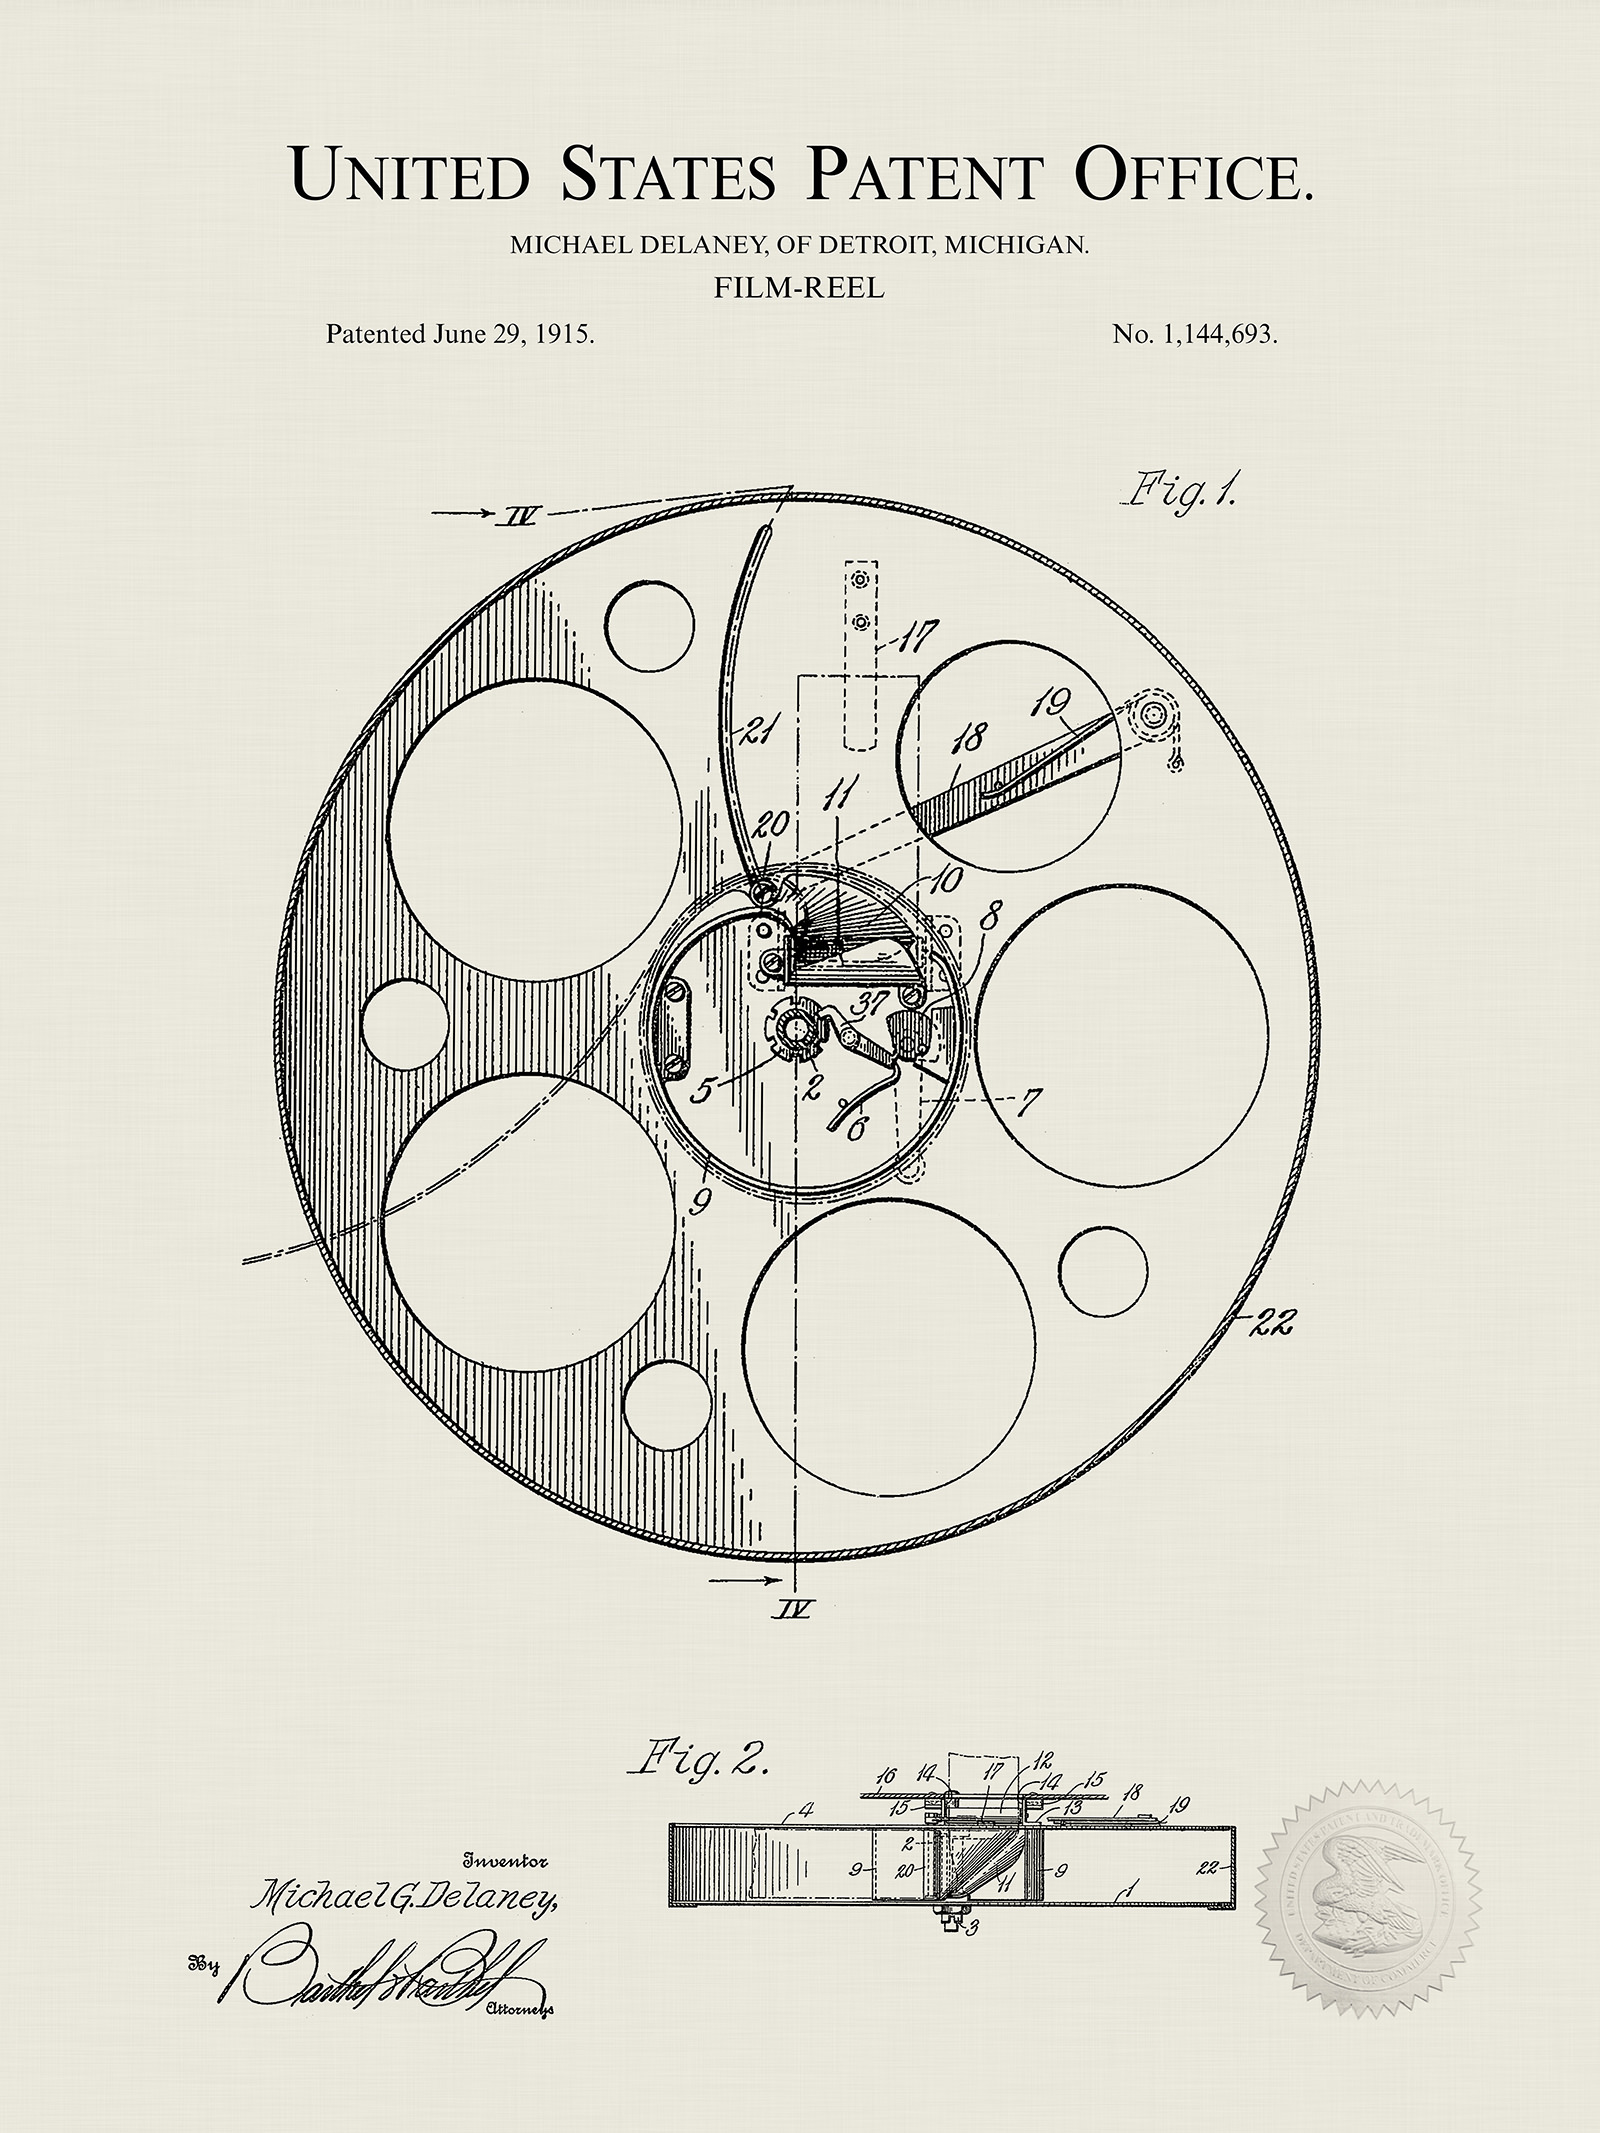 Film Reel Design  1915 Motion Picture Patent